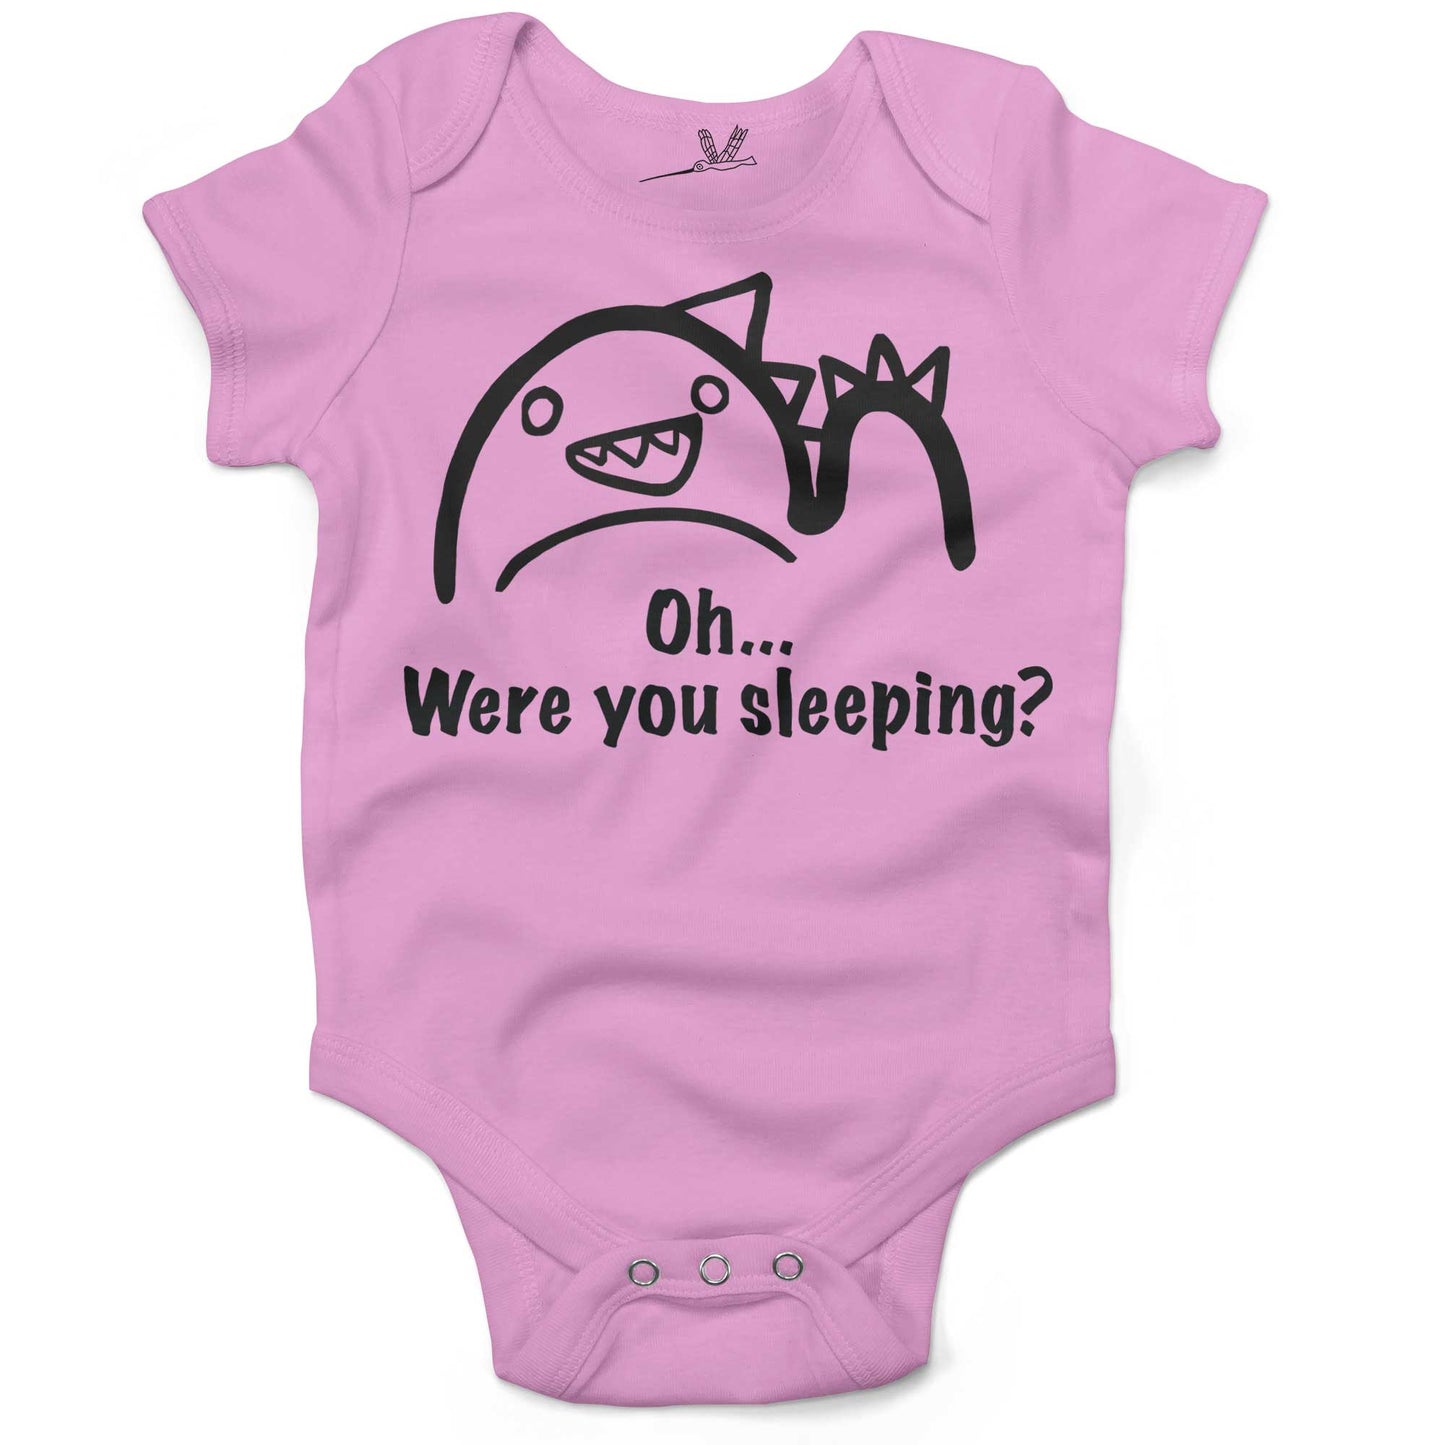 Oh...Were you sleeping? Infant Bodysuit or Raglan Baby Tee-Organic Pink-3-6 months